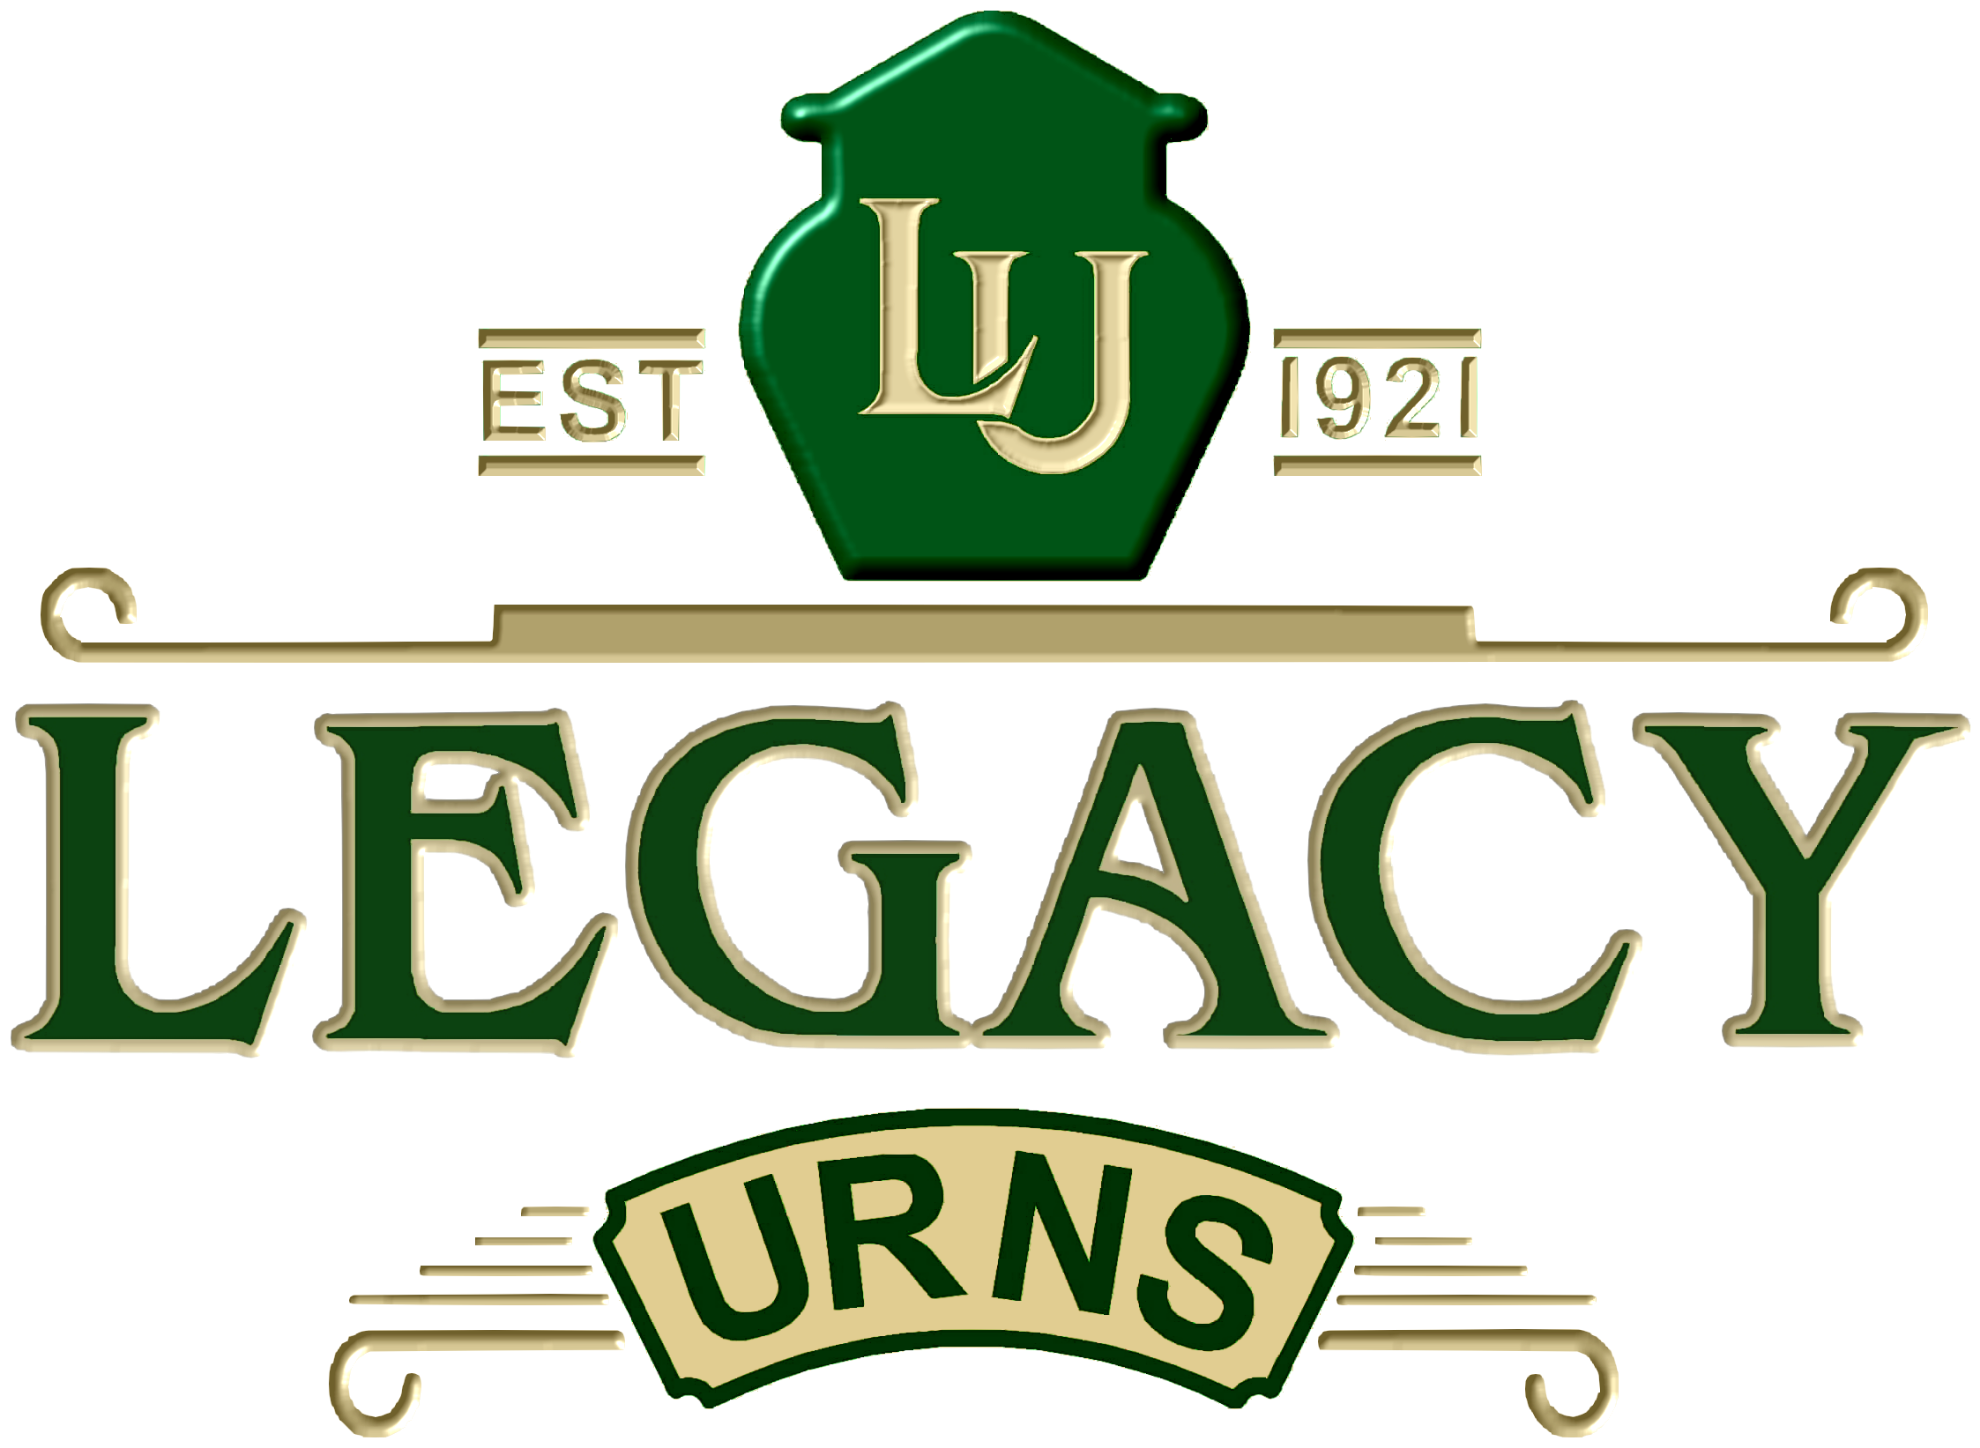 LegacyUrns.com